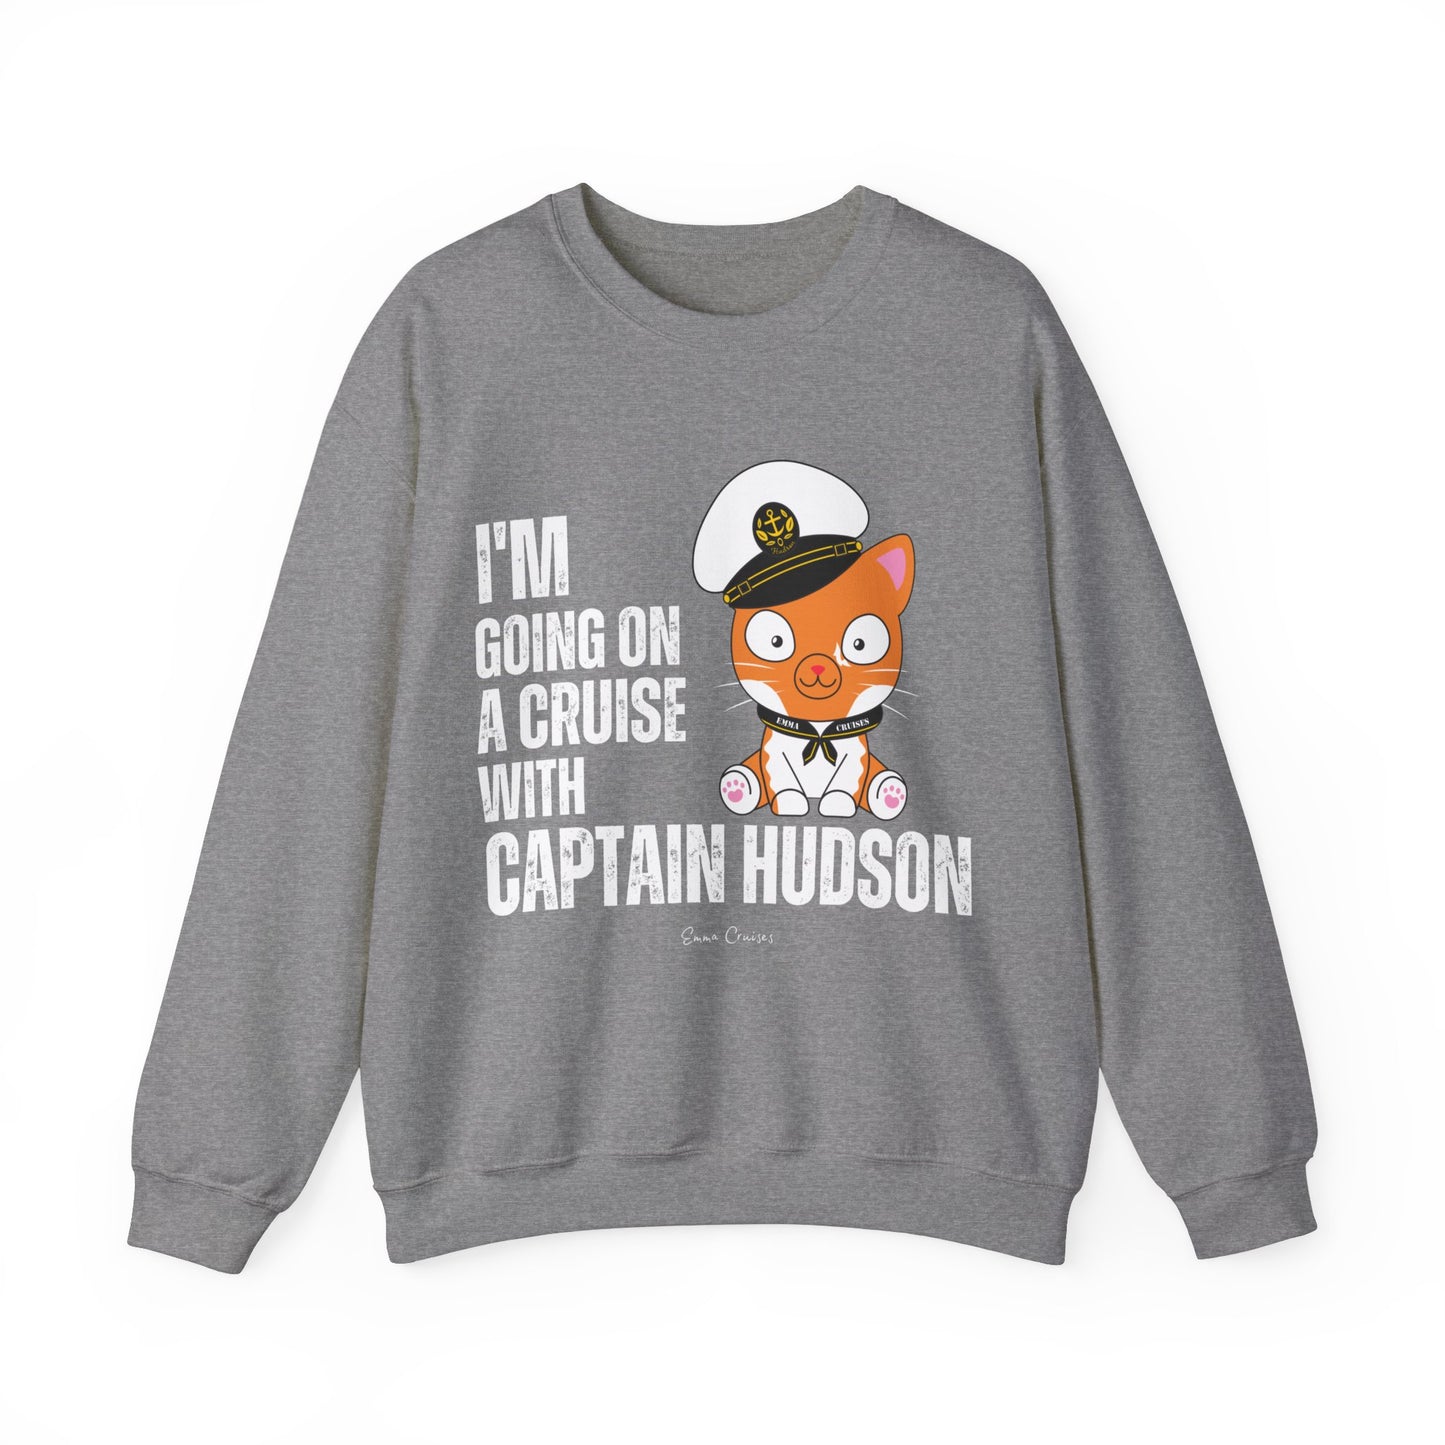 I'm Going on a Cruise with Captain Hudson - UNISEX Crewneck Sweatshirt